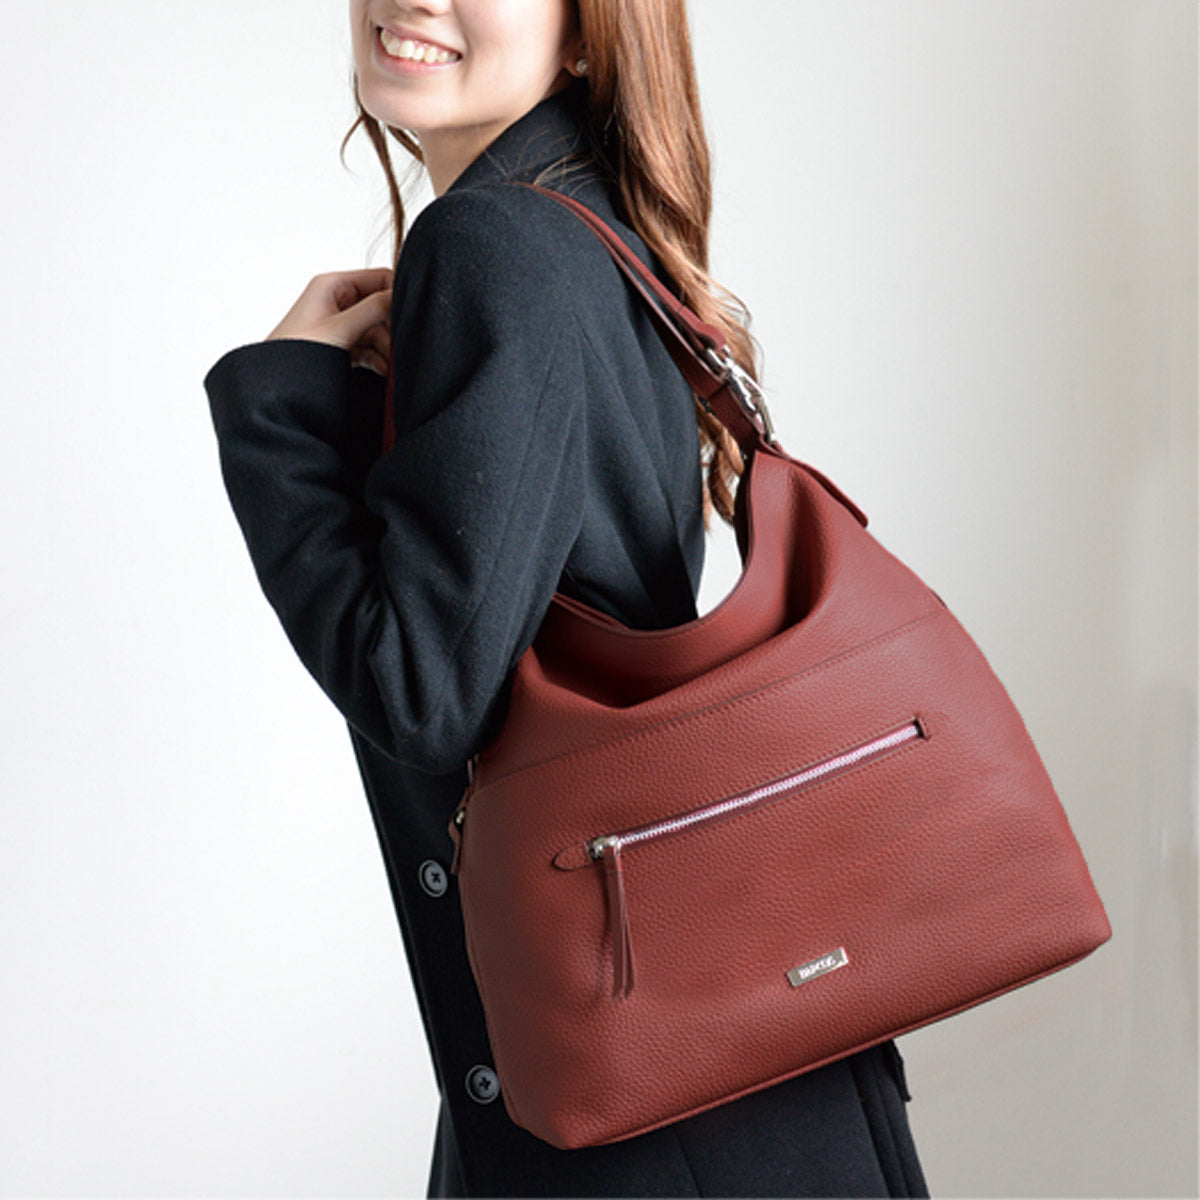 smiling japanese women carrying red leather shoulder bag